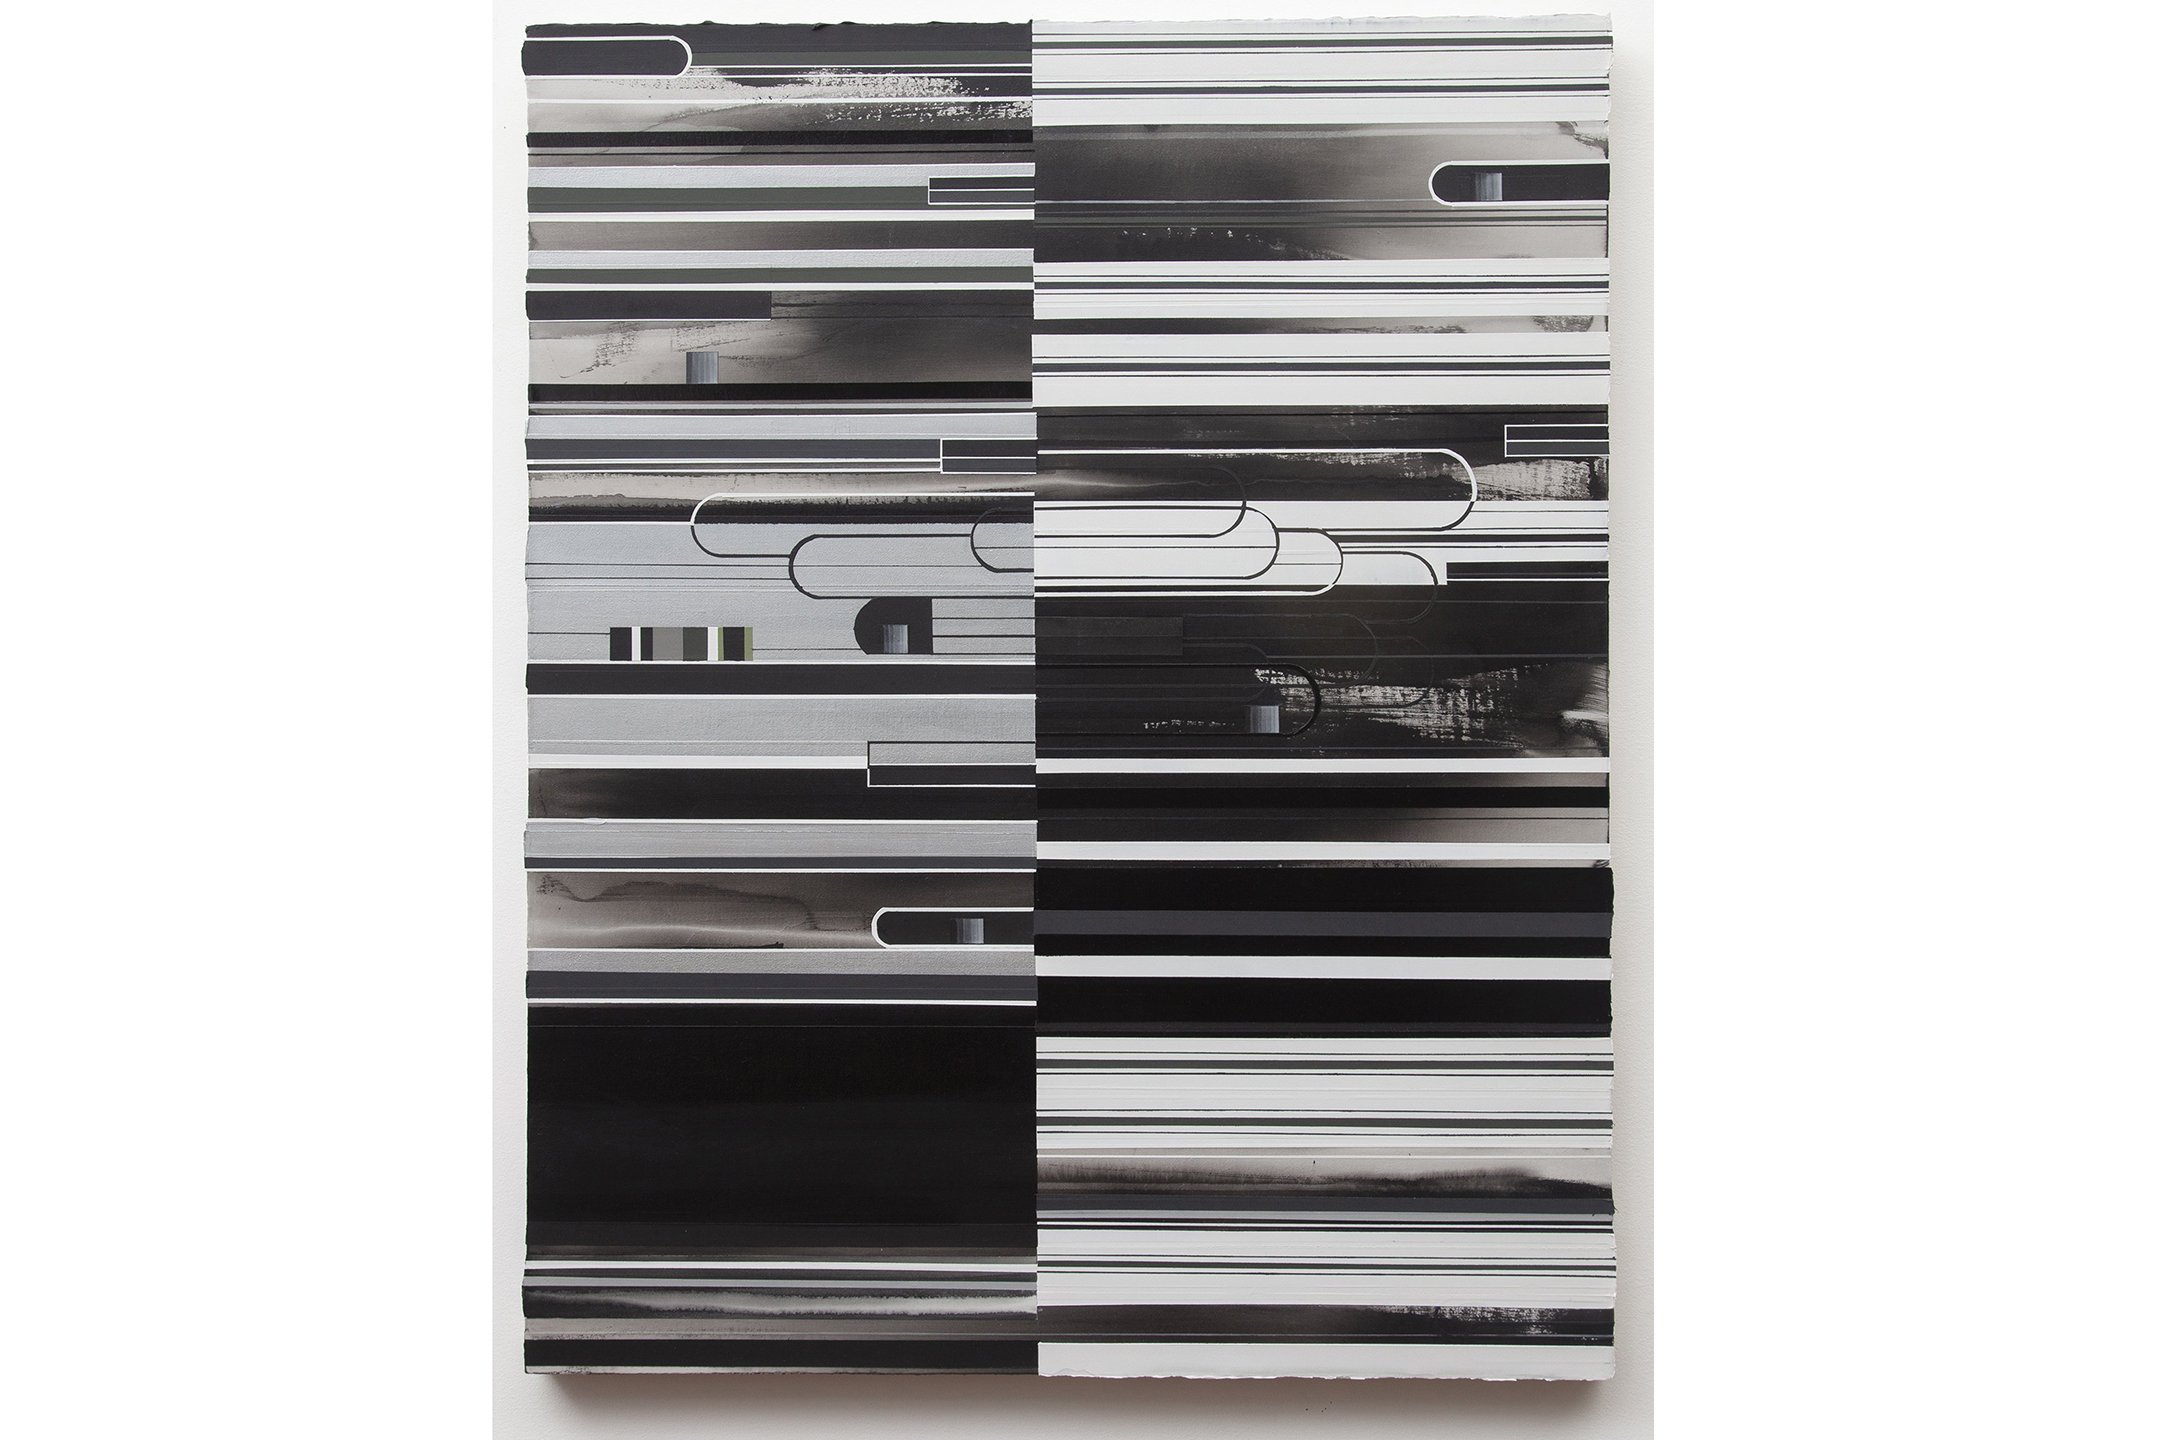  Duane Slick,  Silver Sky,  2020, acrylic on linen, 45 x 36 in 